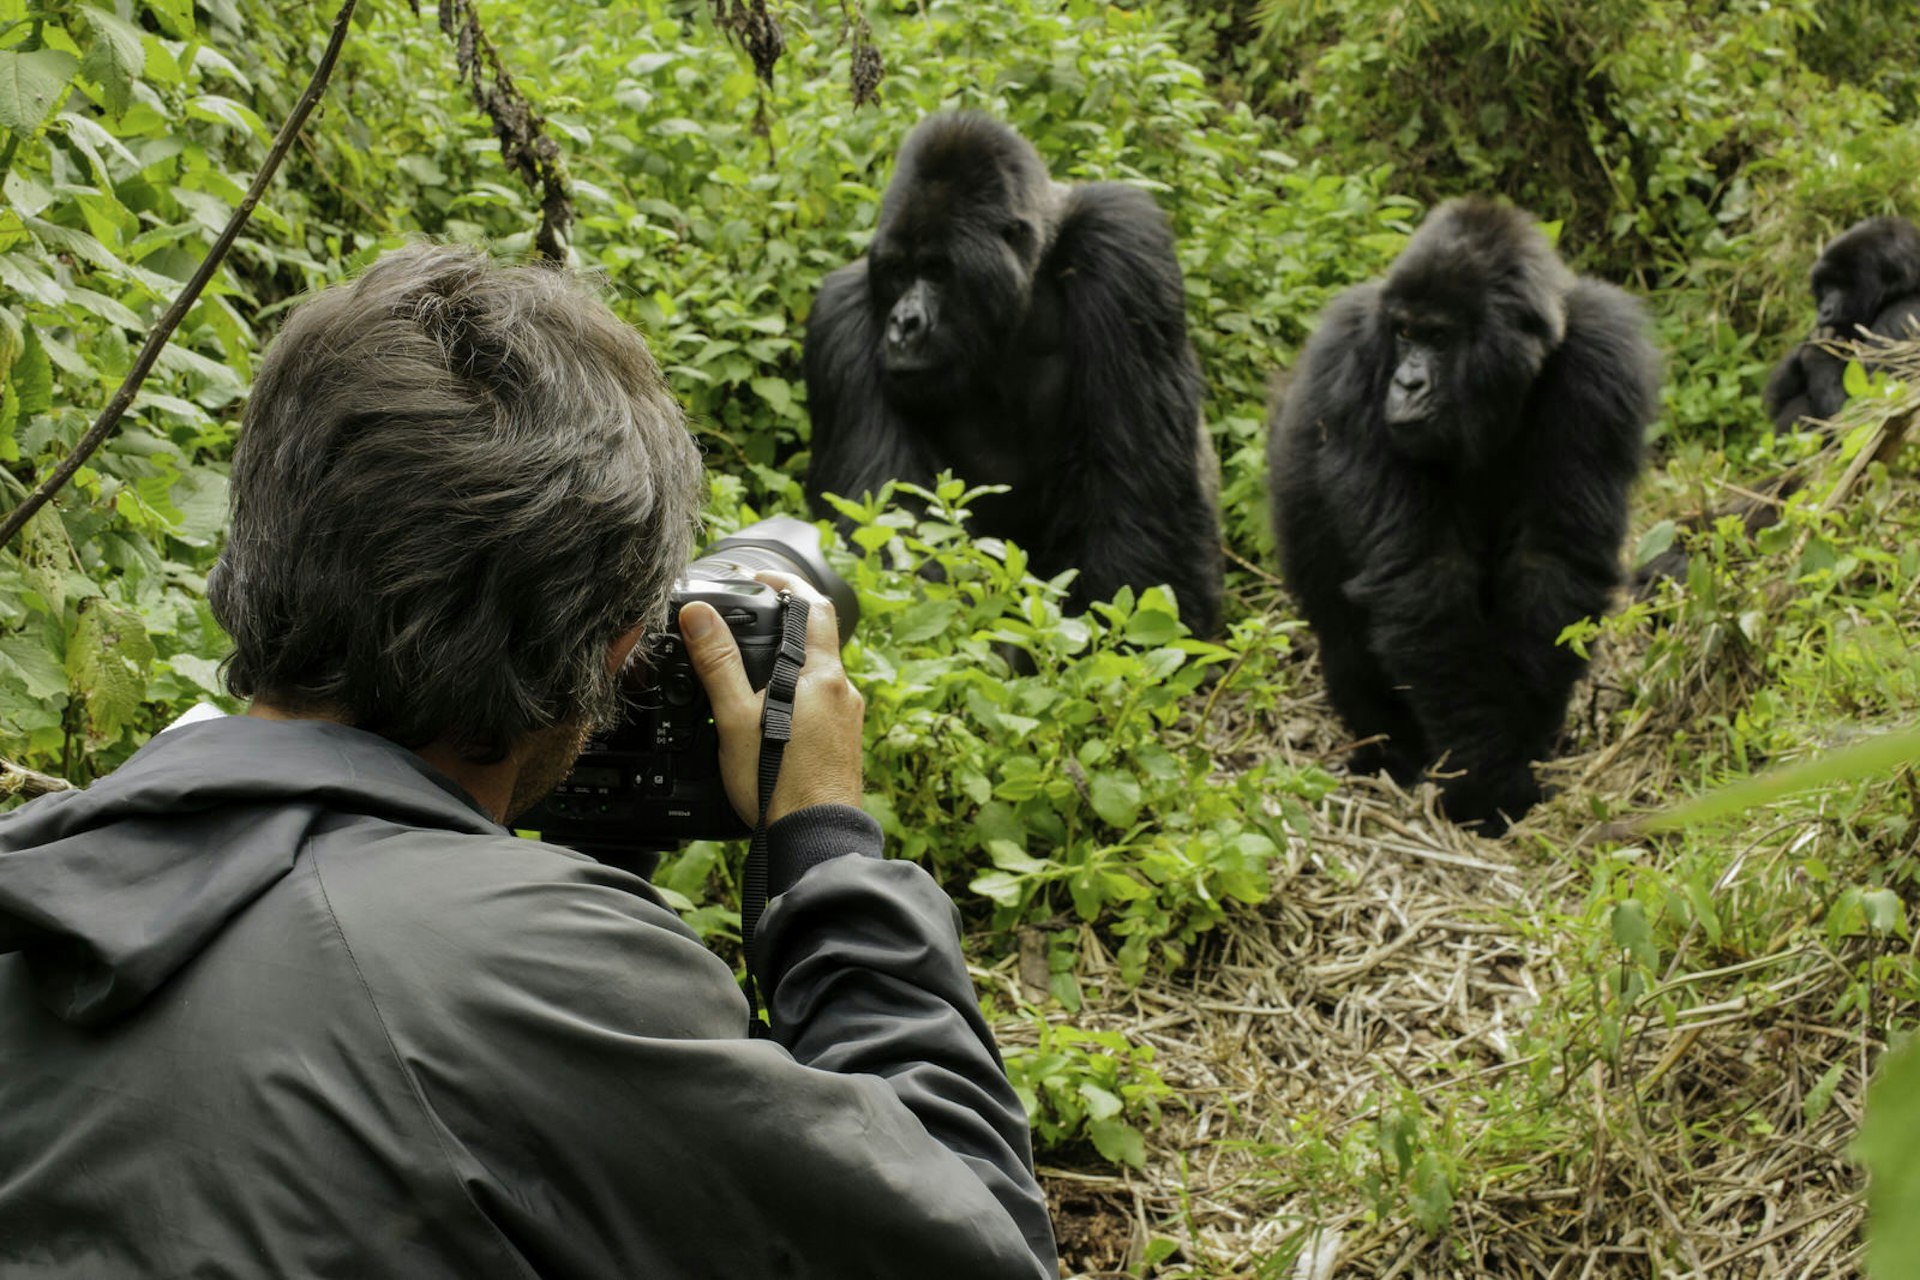 wedding anniversary trip ideas - a man take a photograph of two silverback gorillas.